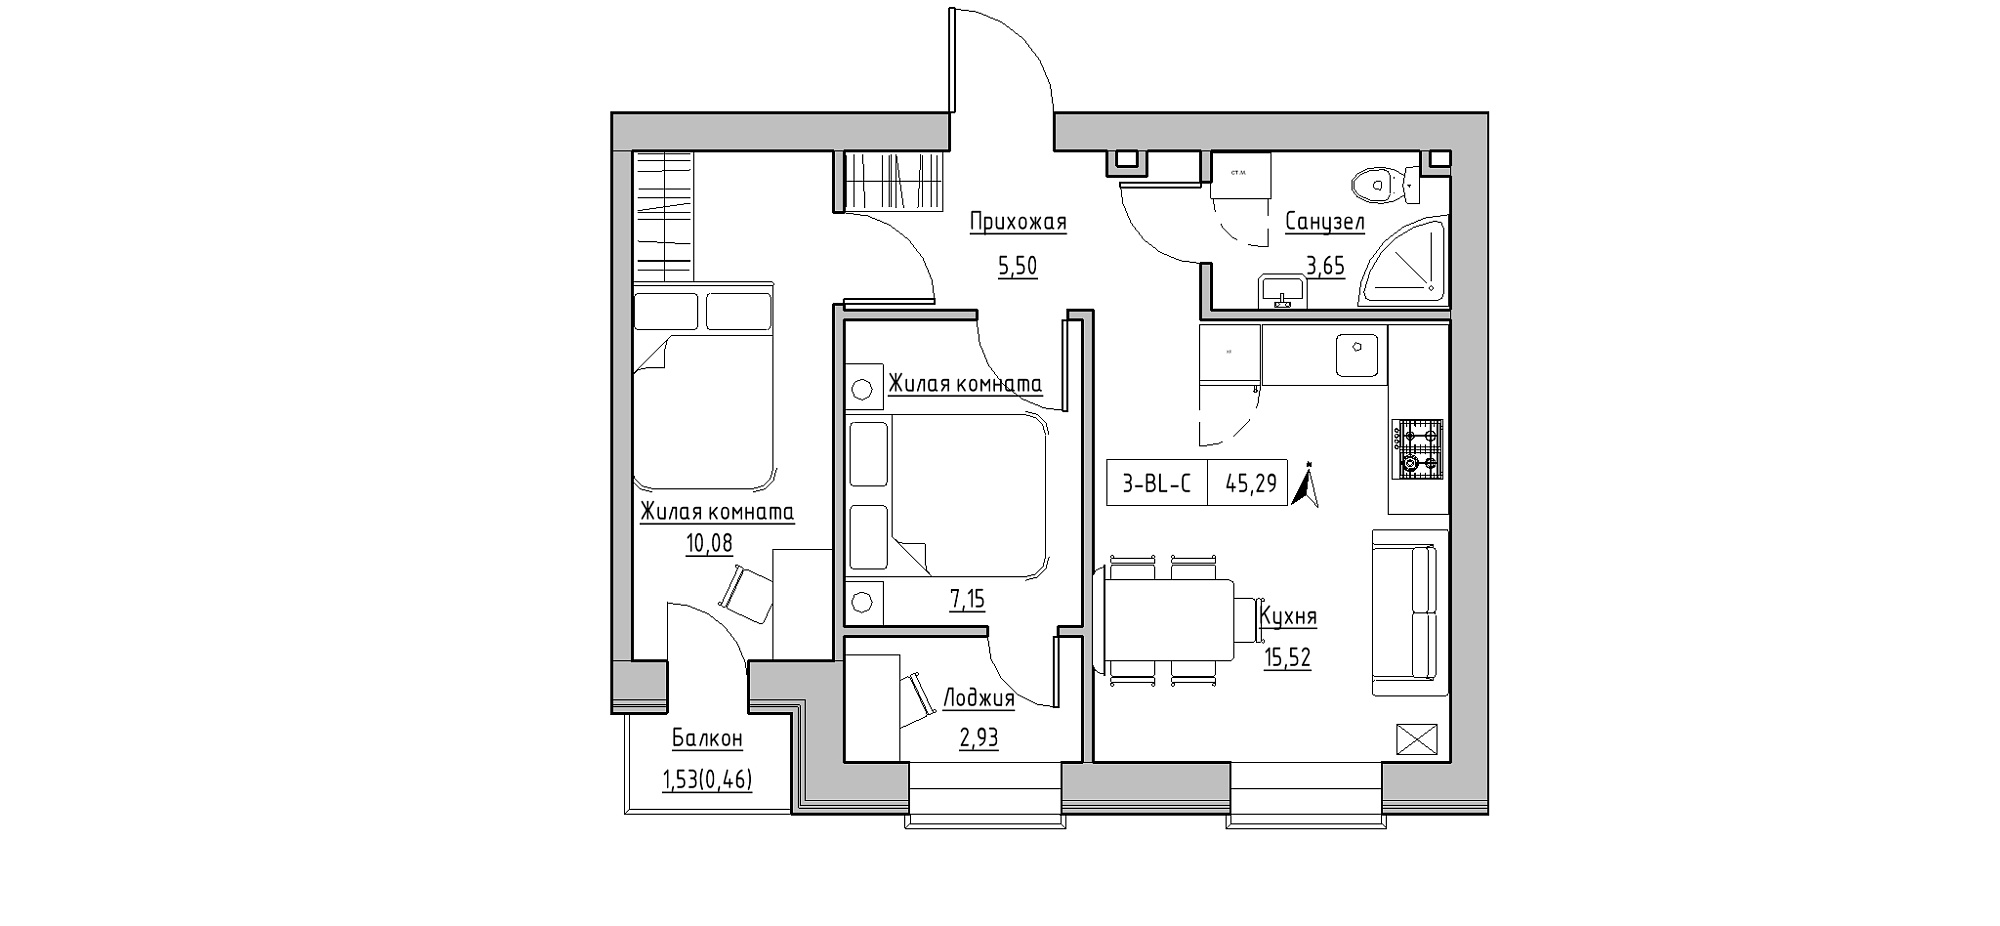 Planning 3-rm flats area 45.29m2, KS-020-02/0008.